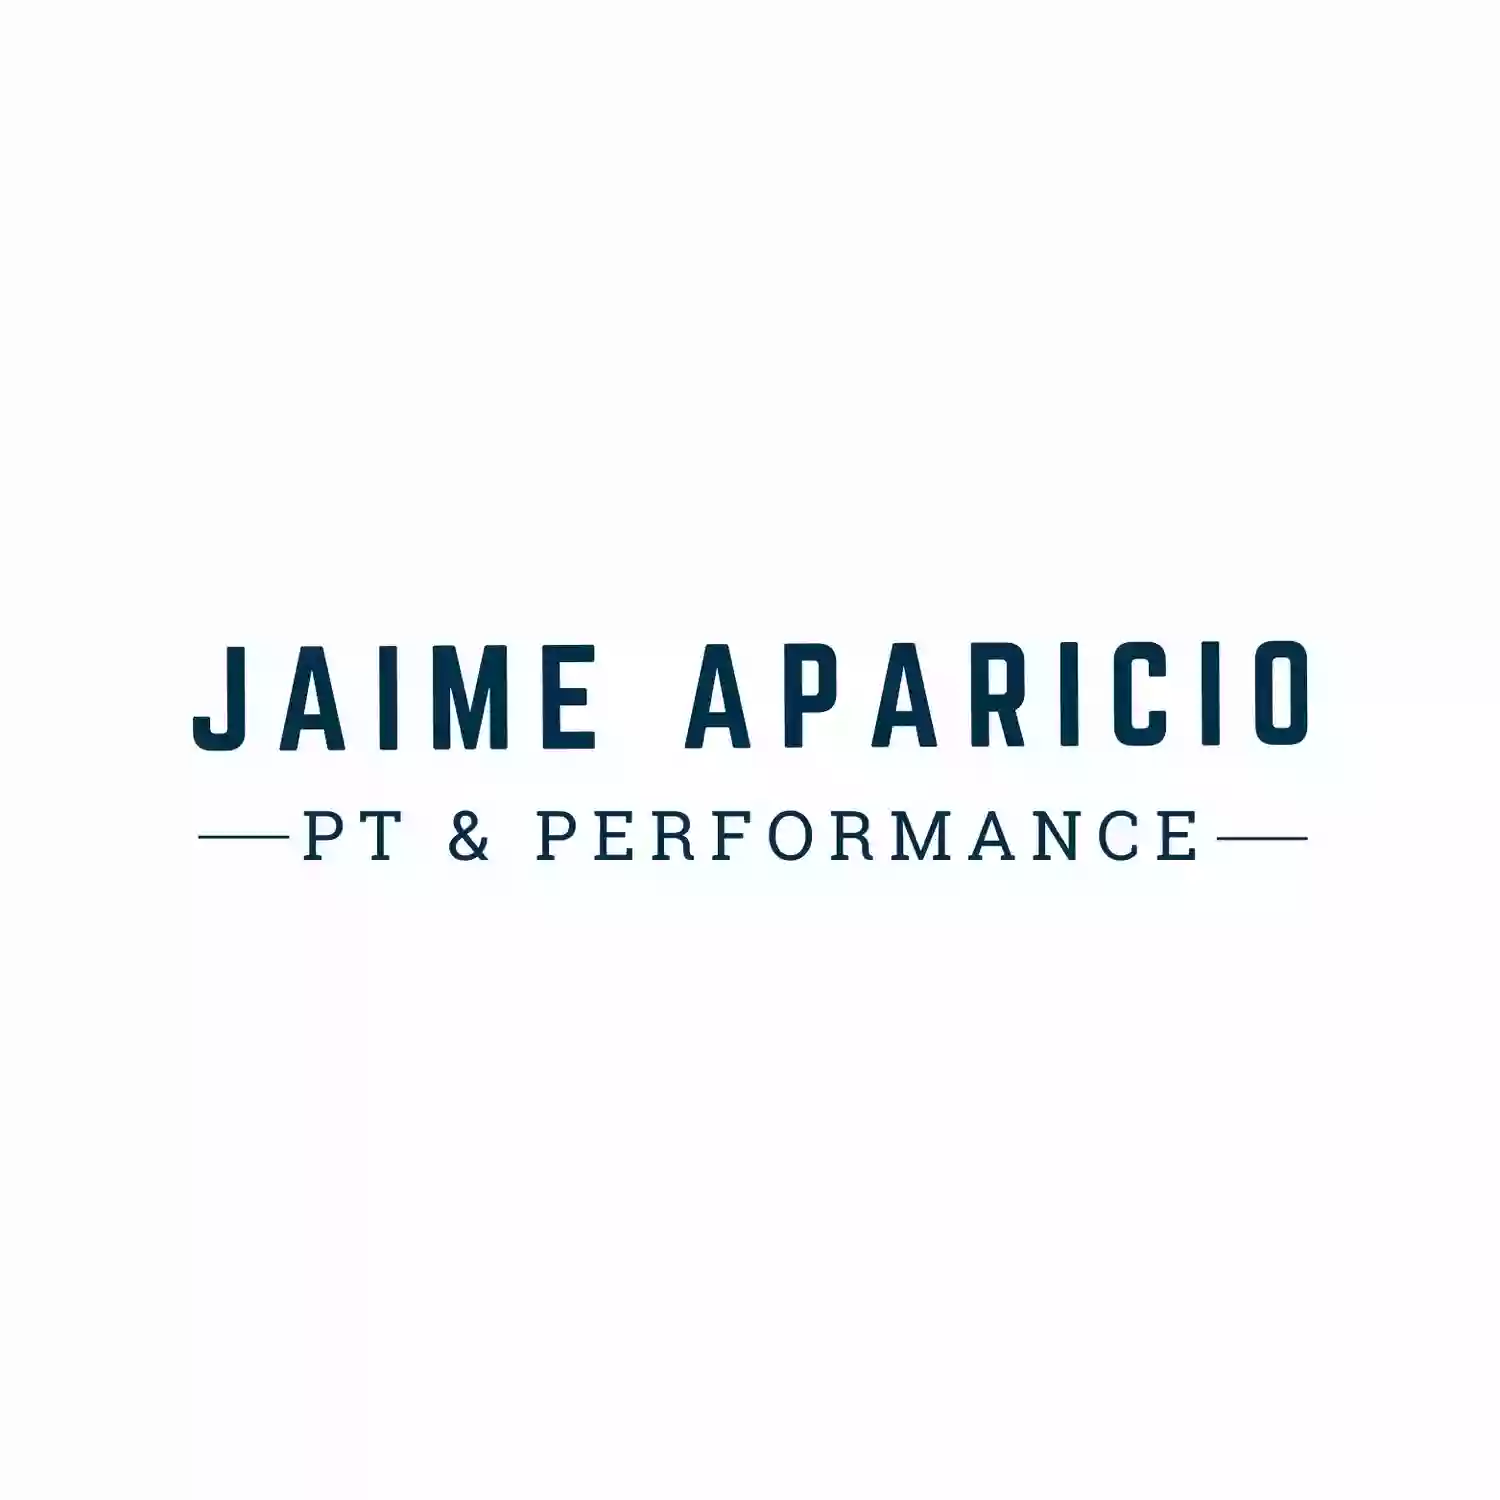 Dr. Jaime Aparicio PT & Performance